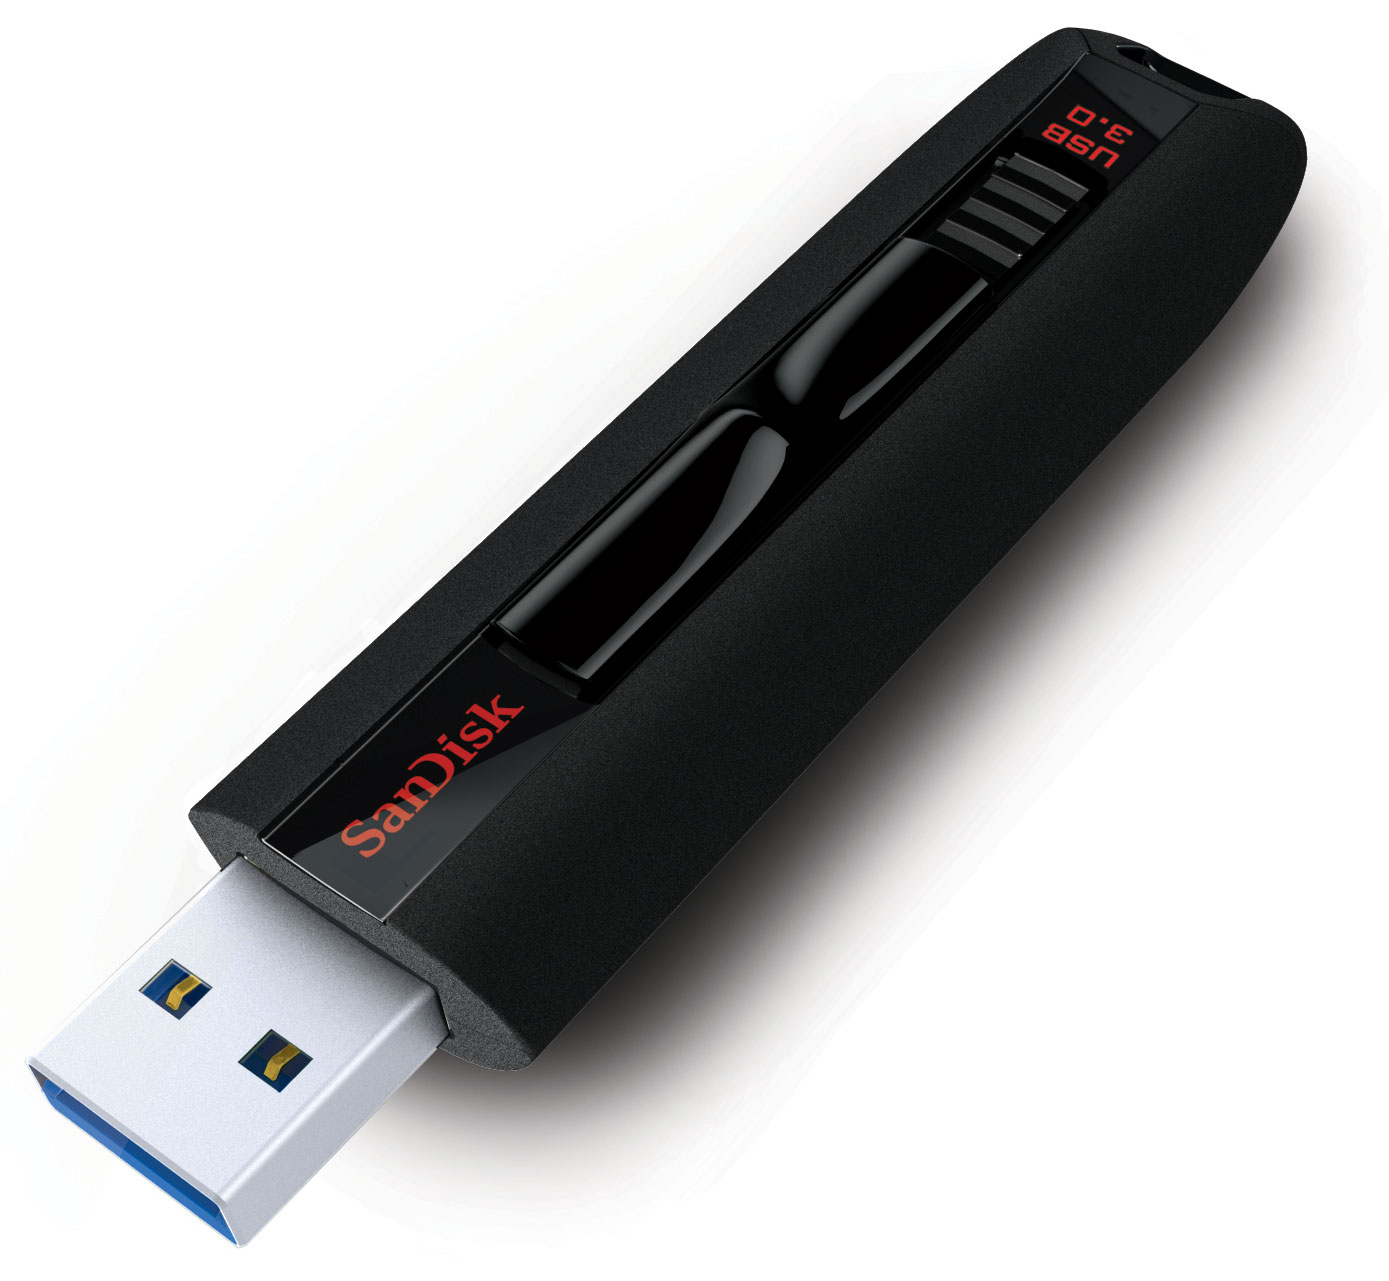 SanDisk Extreme USB 3.0 Flash Drive - 128GB